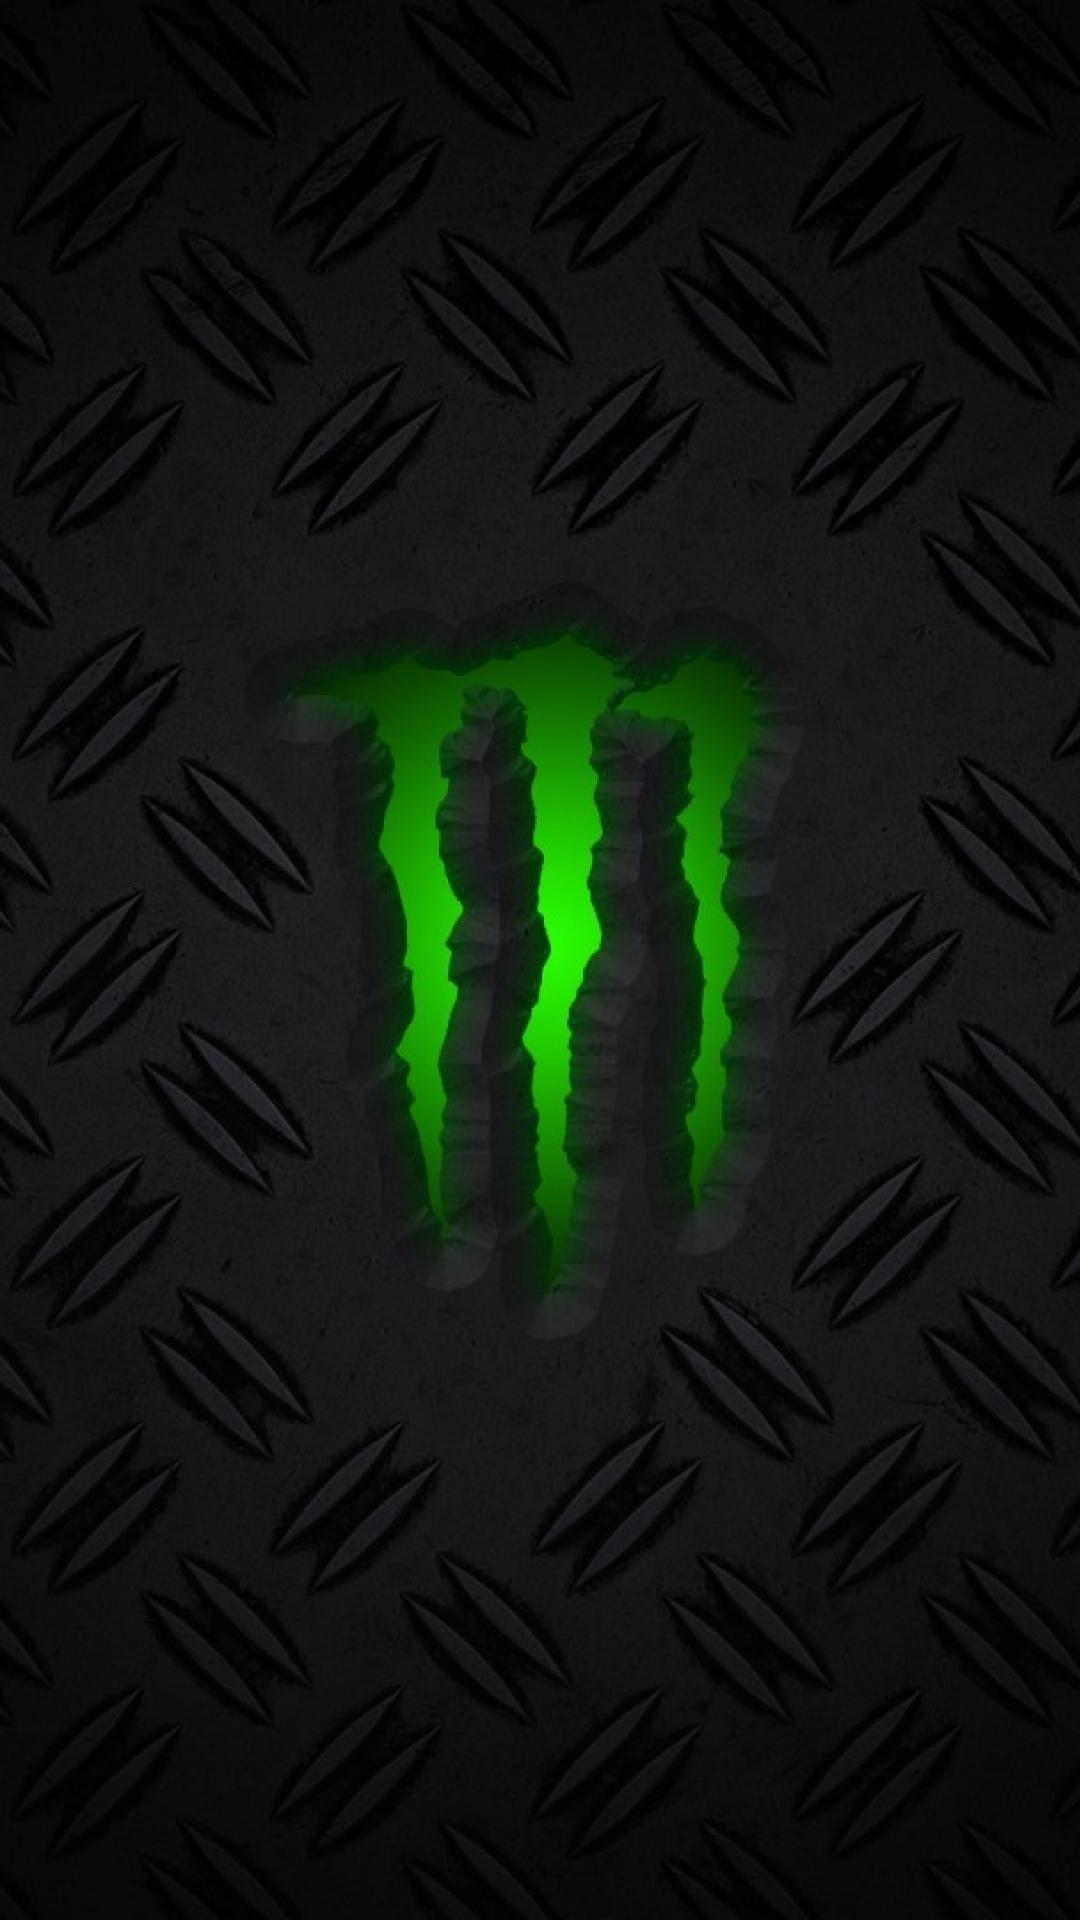 Man & Monster Energy Car Live Wallpaper - free download